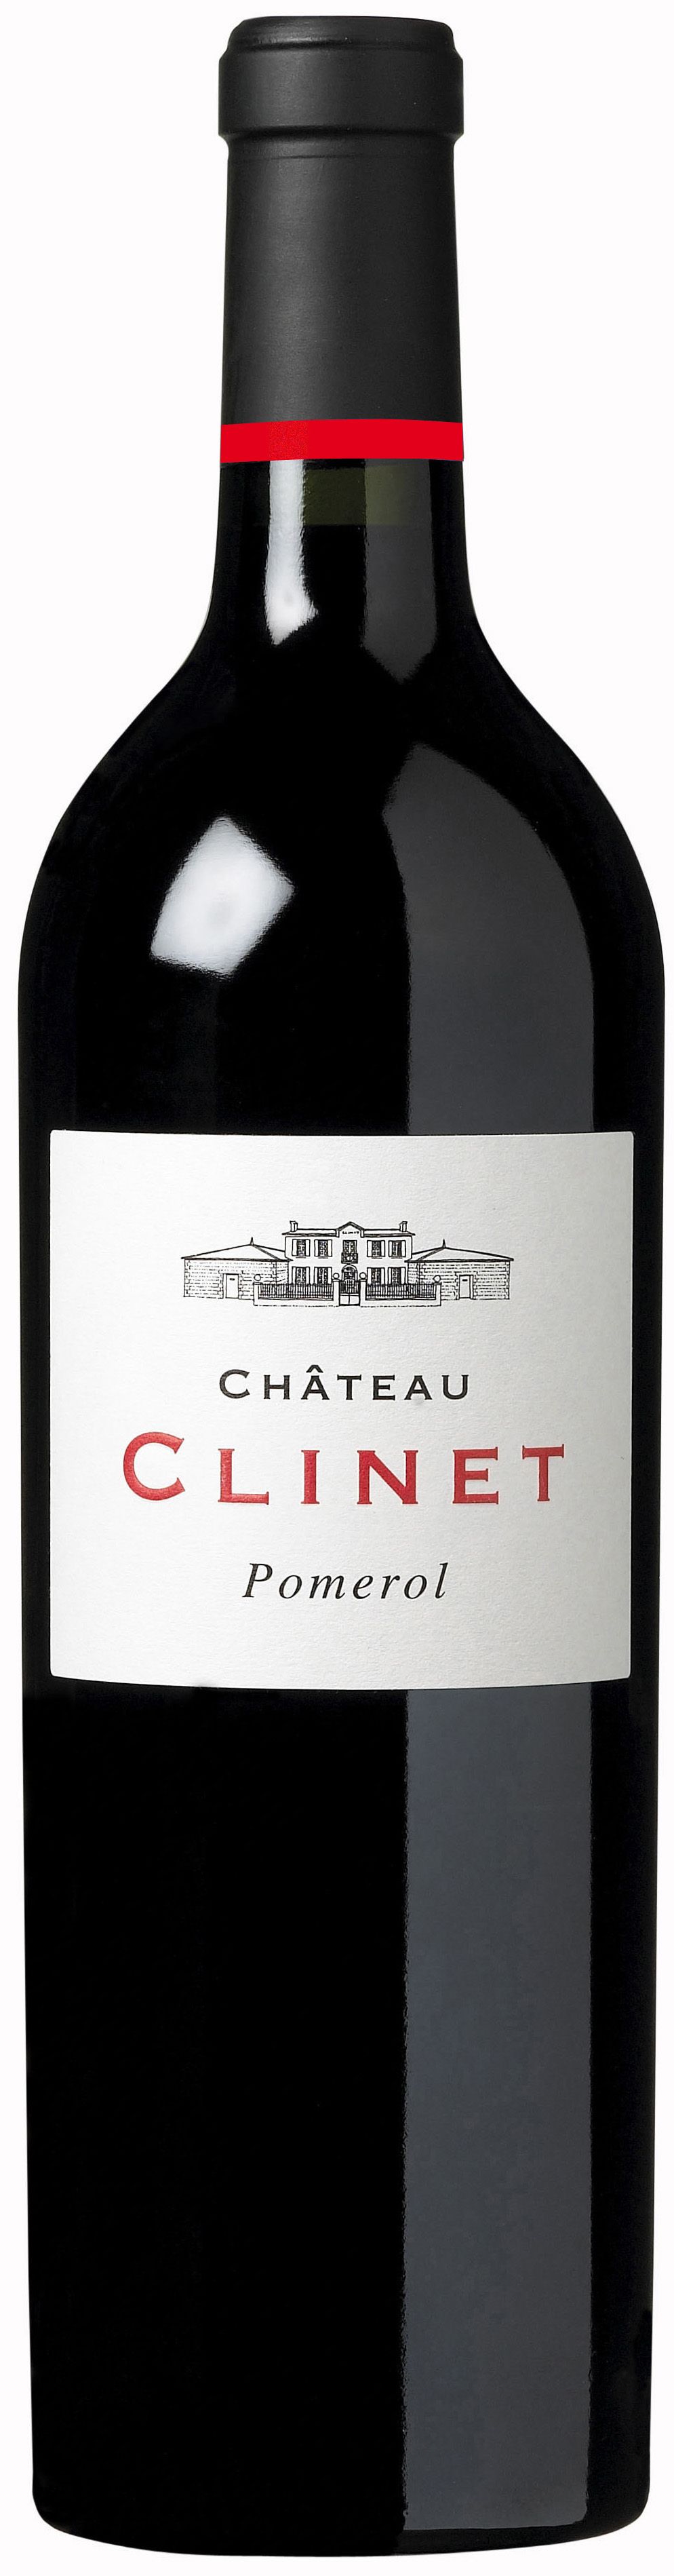 Chateau Clinet, 2014